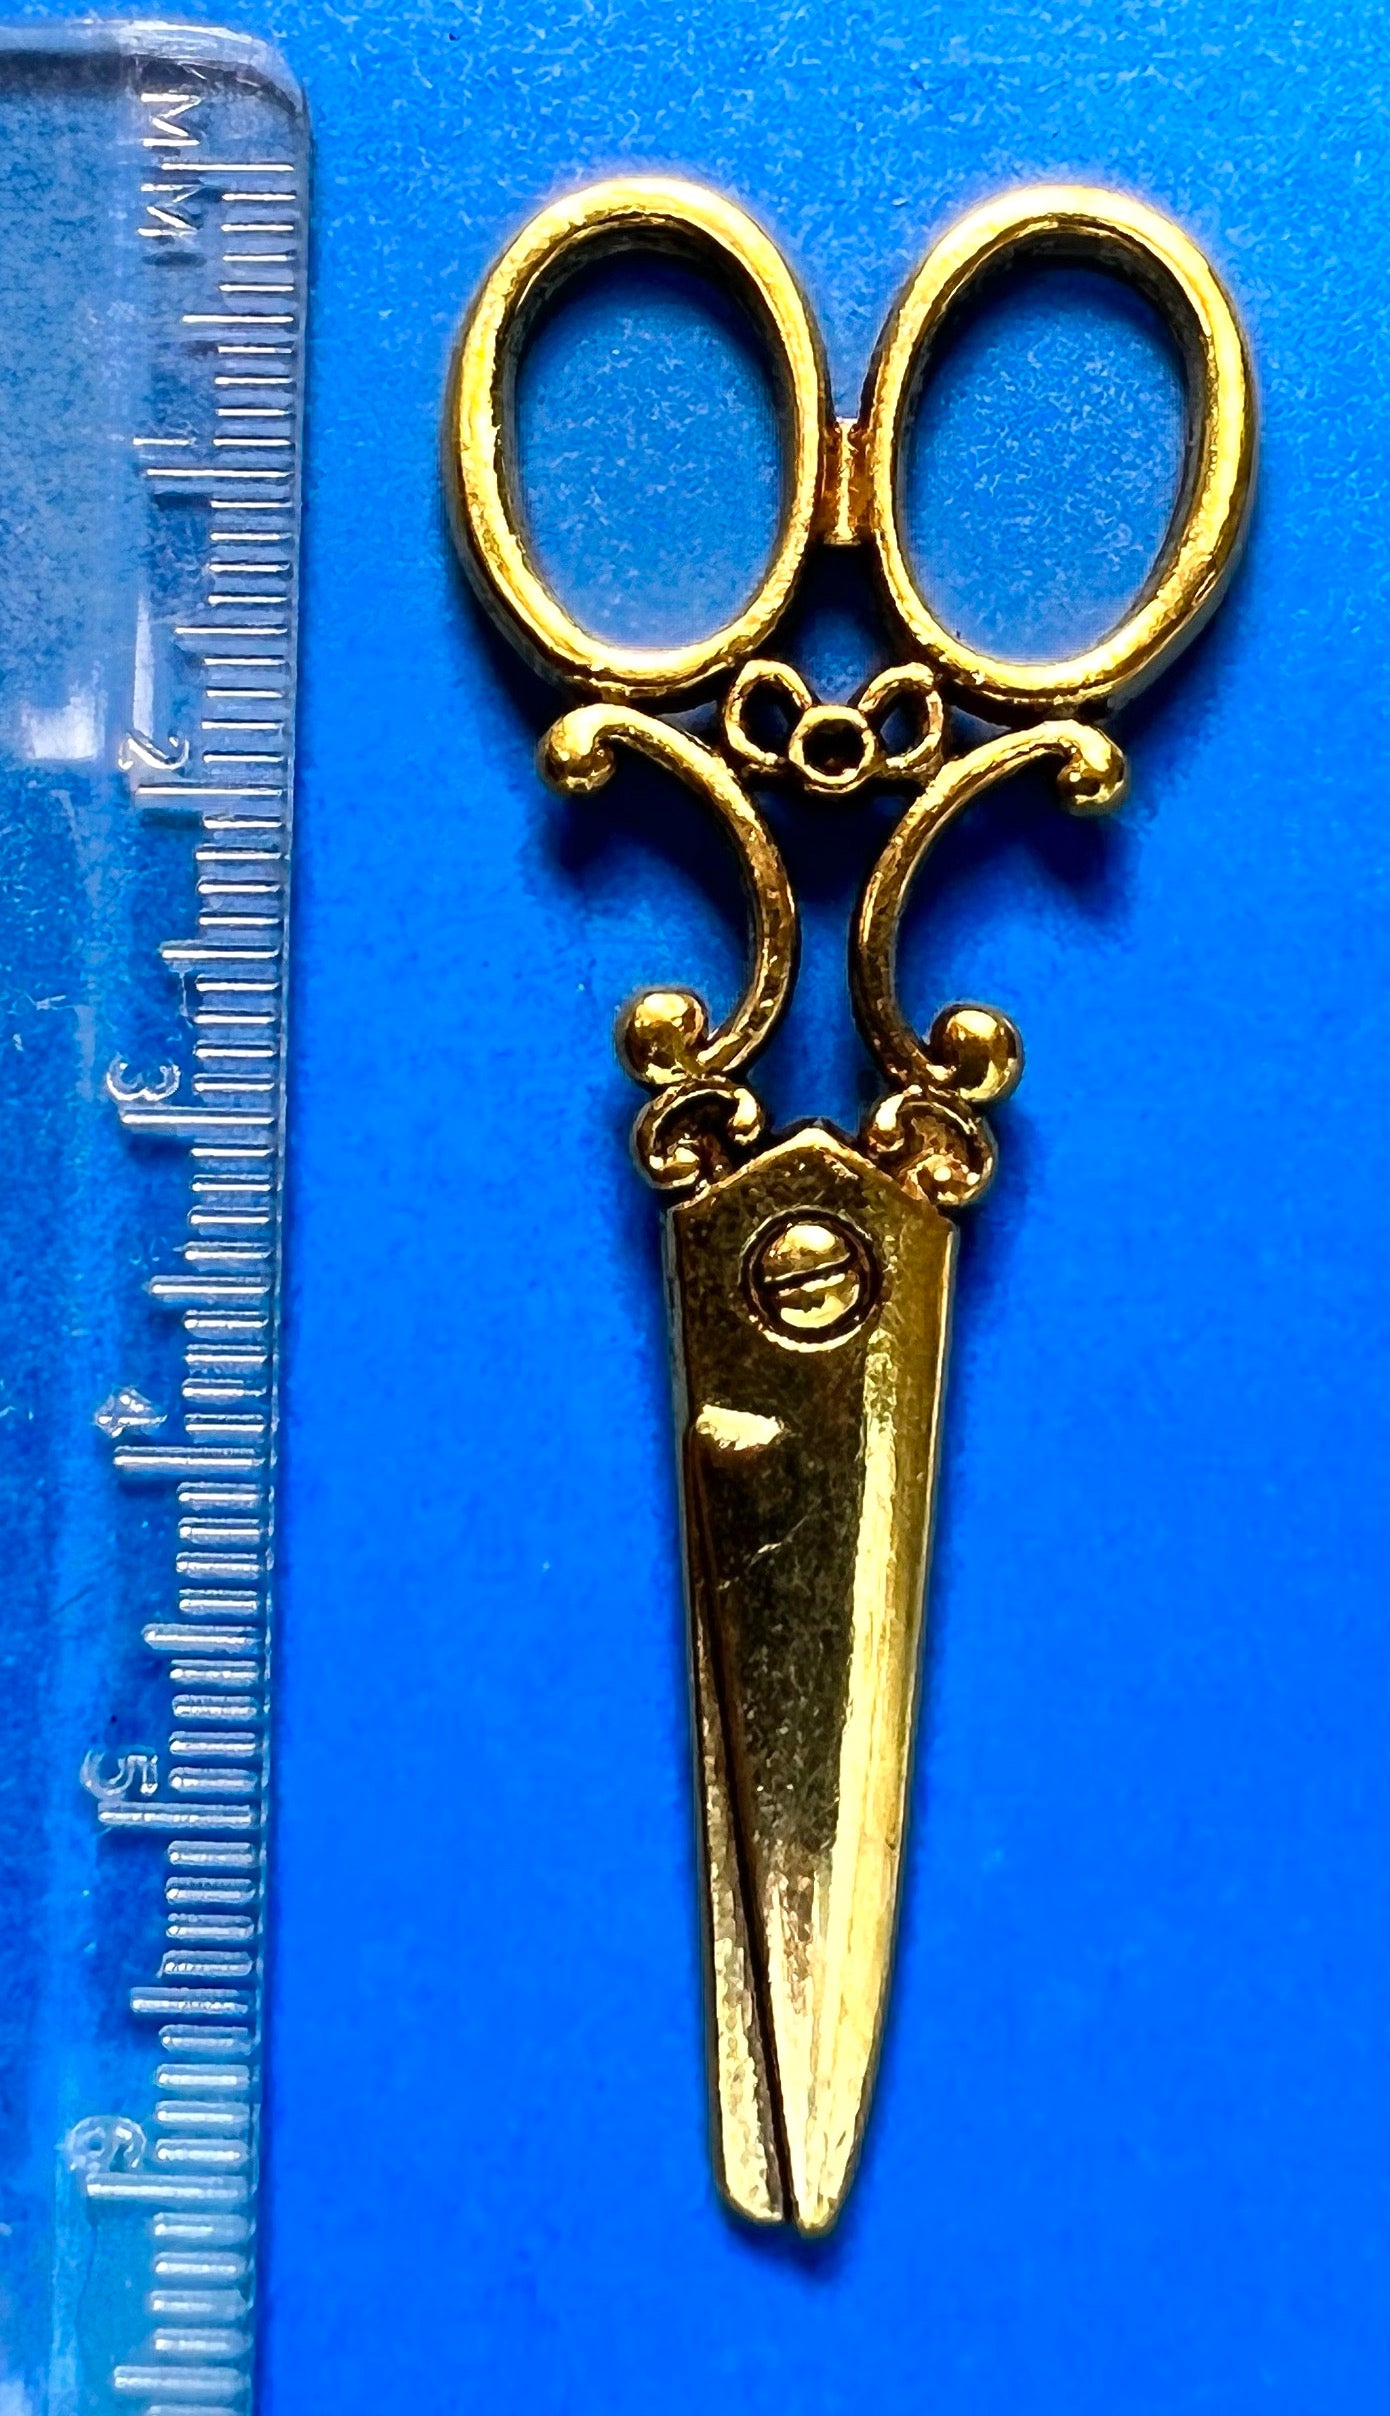 6cm long Gold or Silver Tone Scissors Pendant / Charm